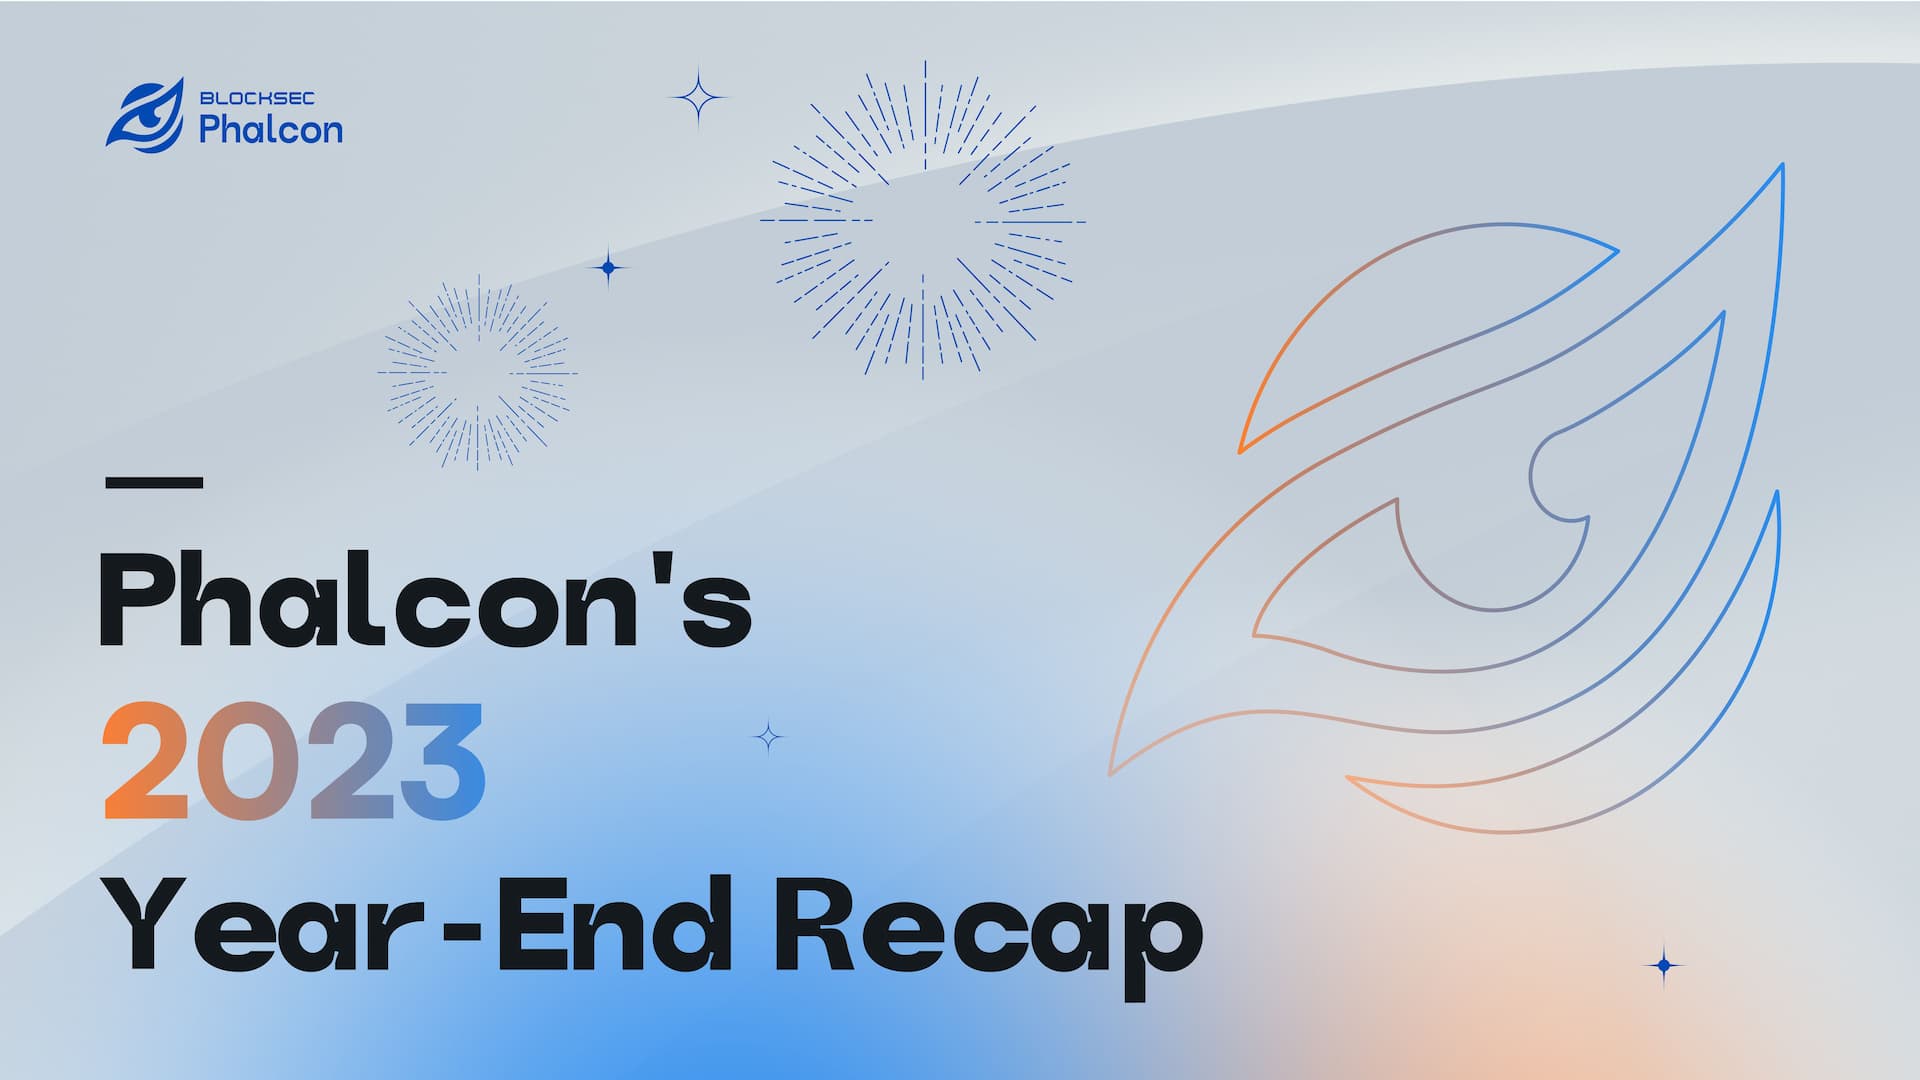 Phalcon's 2023 Year-End Recap